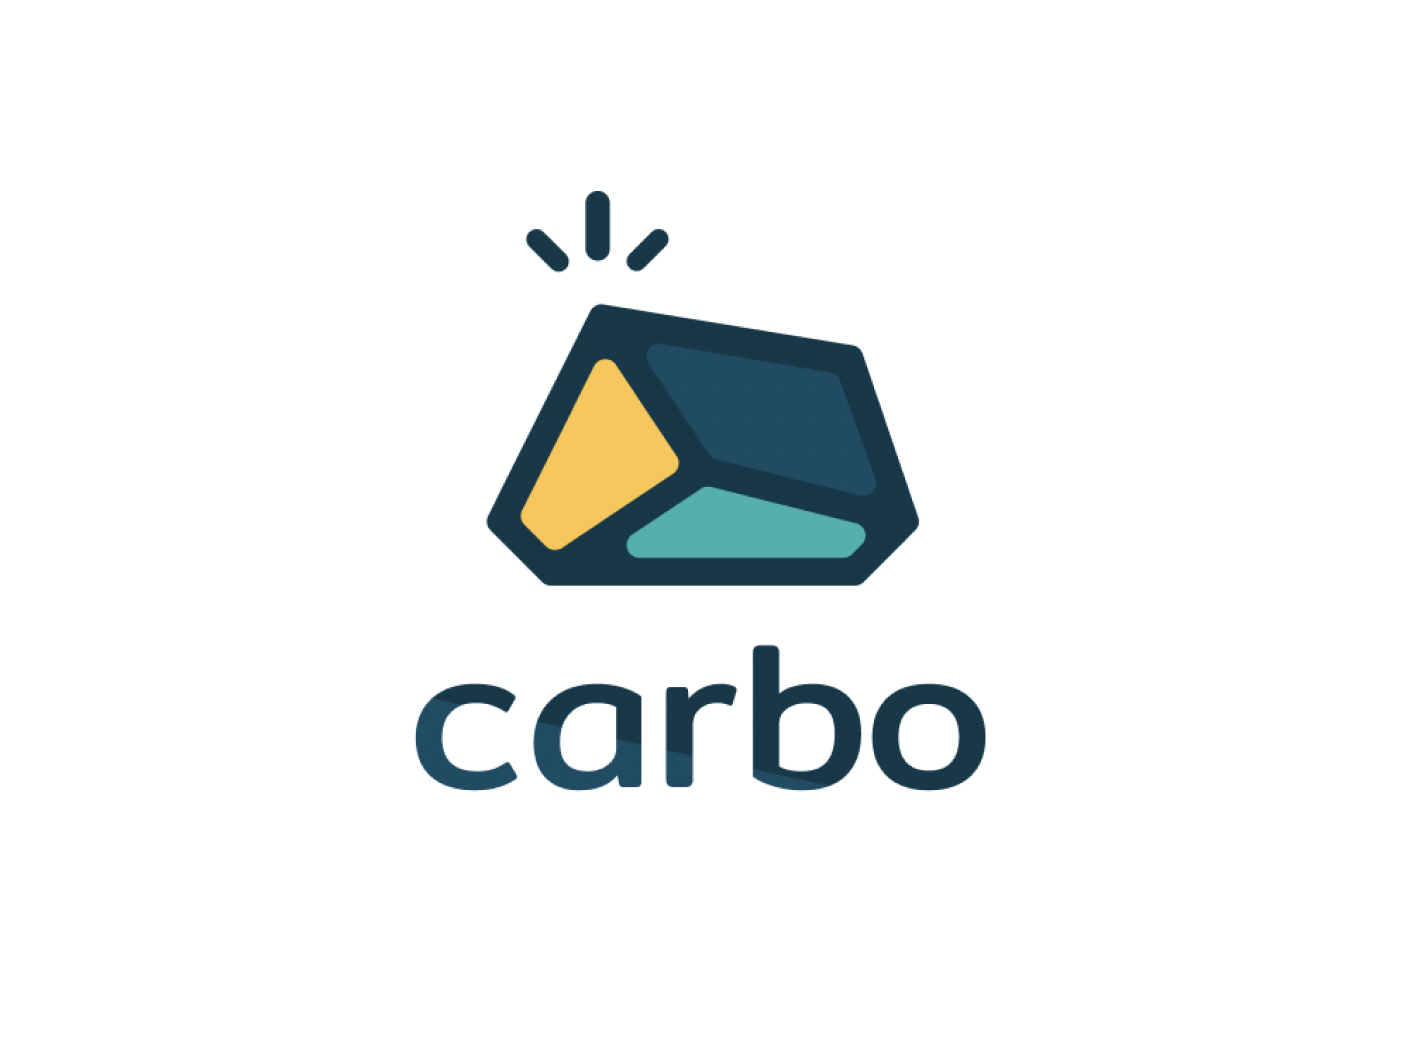 Logo Carbo